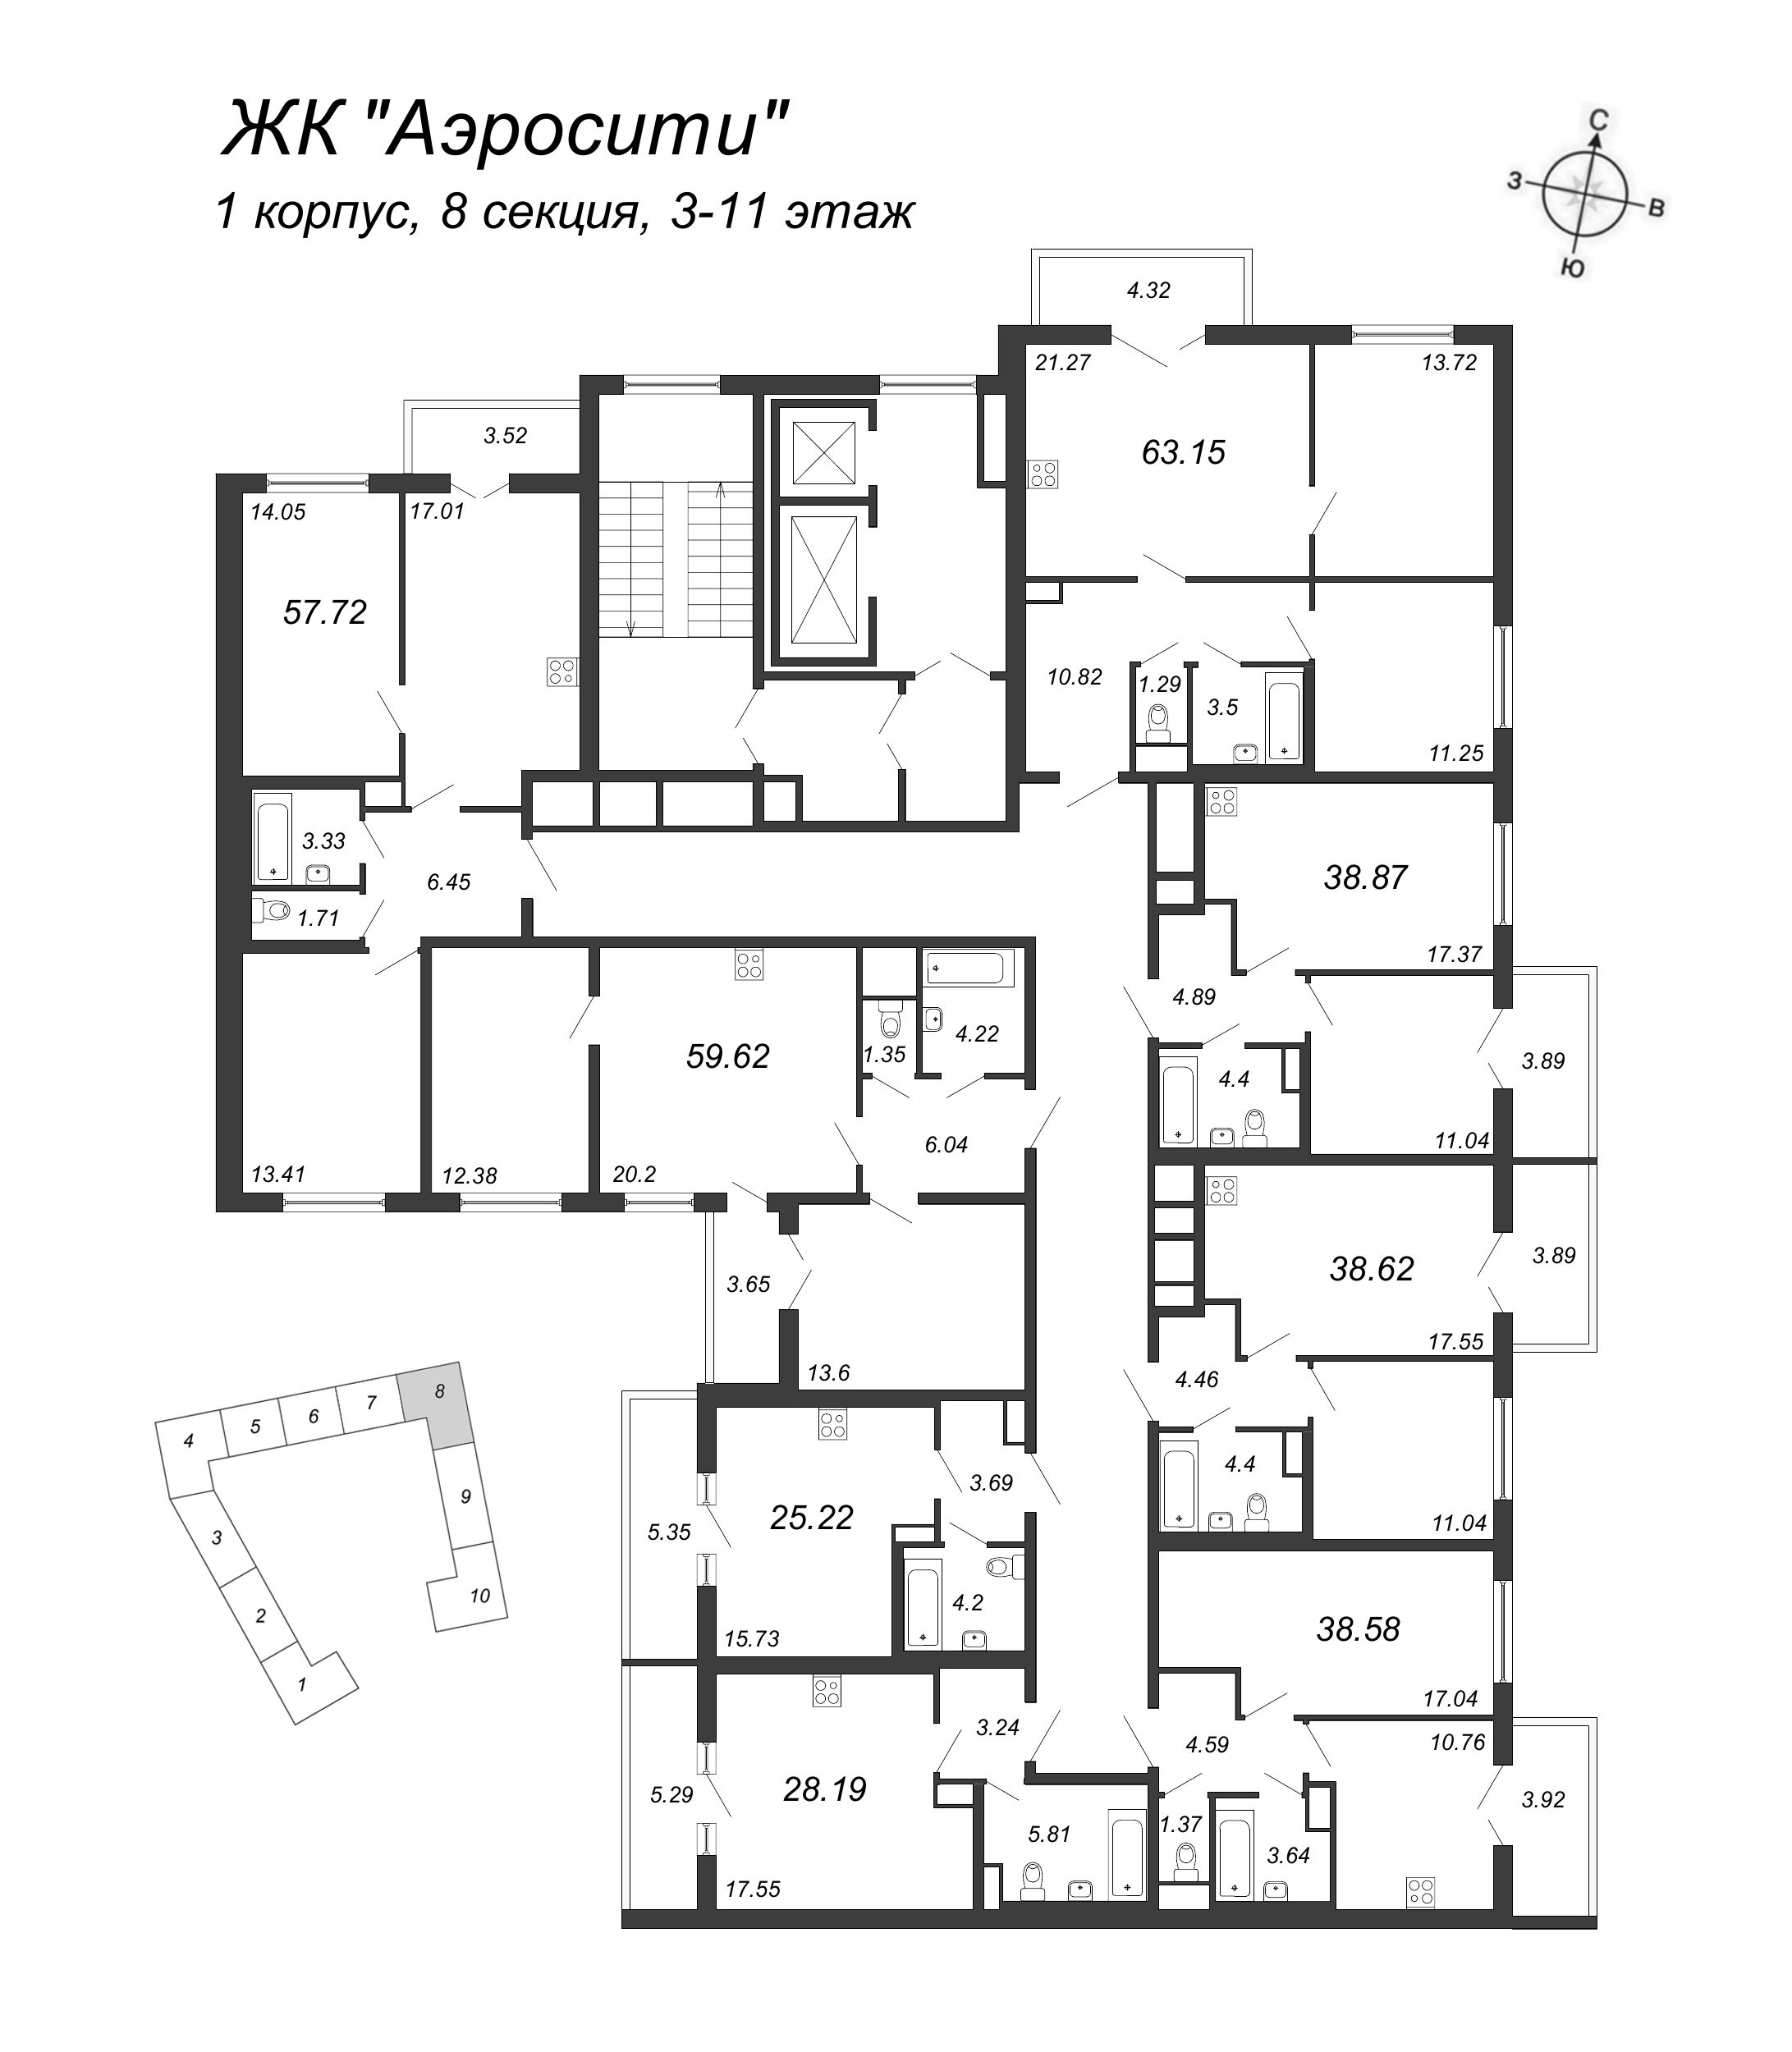 2-комнатная (Евро) квартира, 38.6 м² - планировка этажа